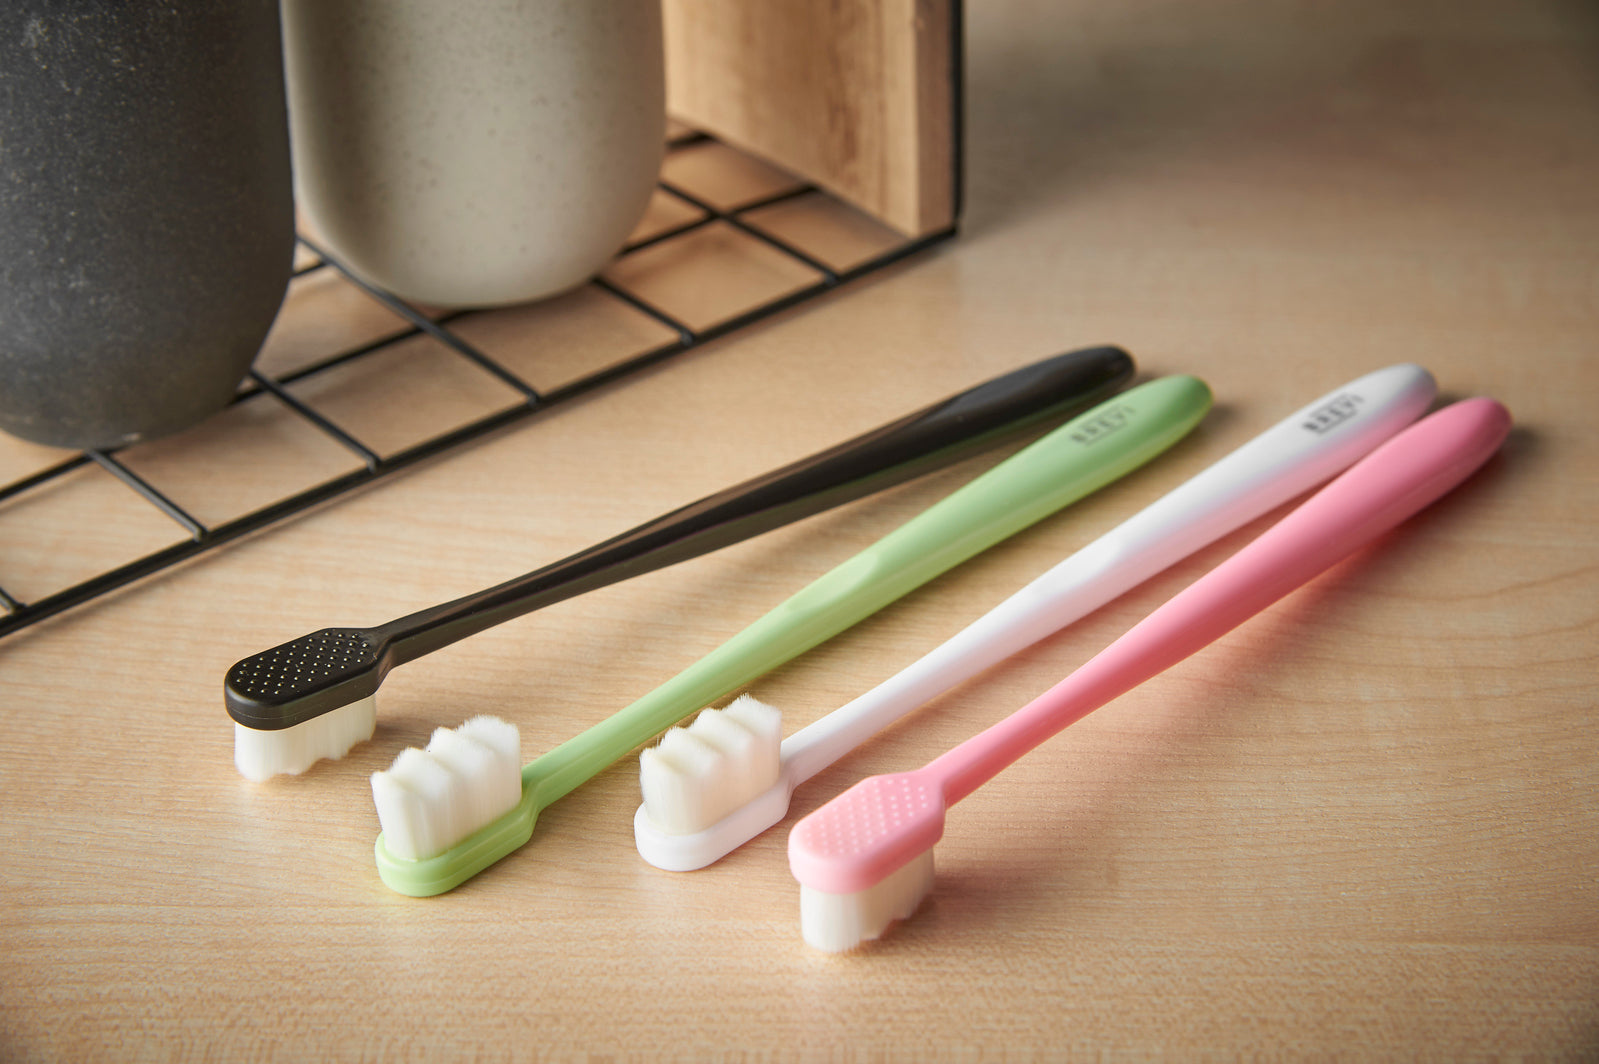 BREVI™ Nordic-Inspired Premium Nano Toothbrush